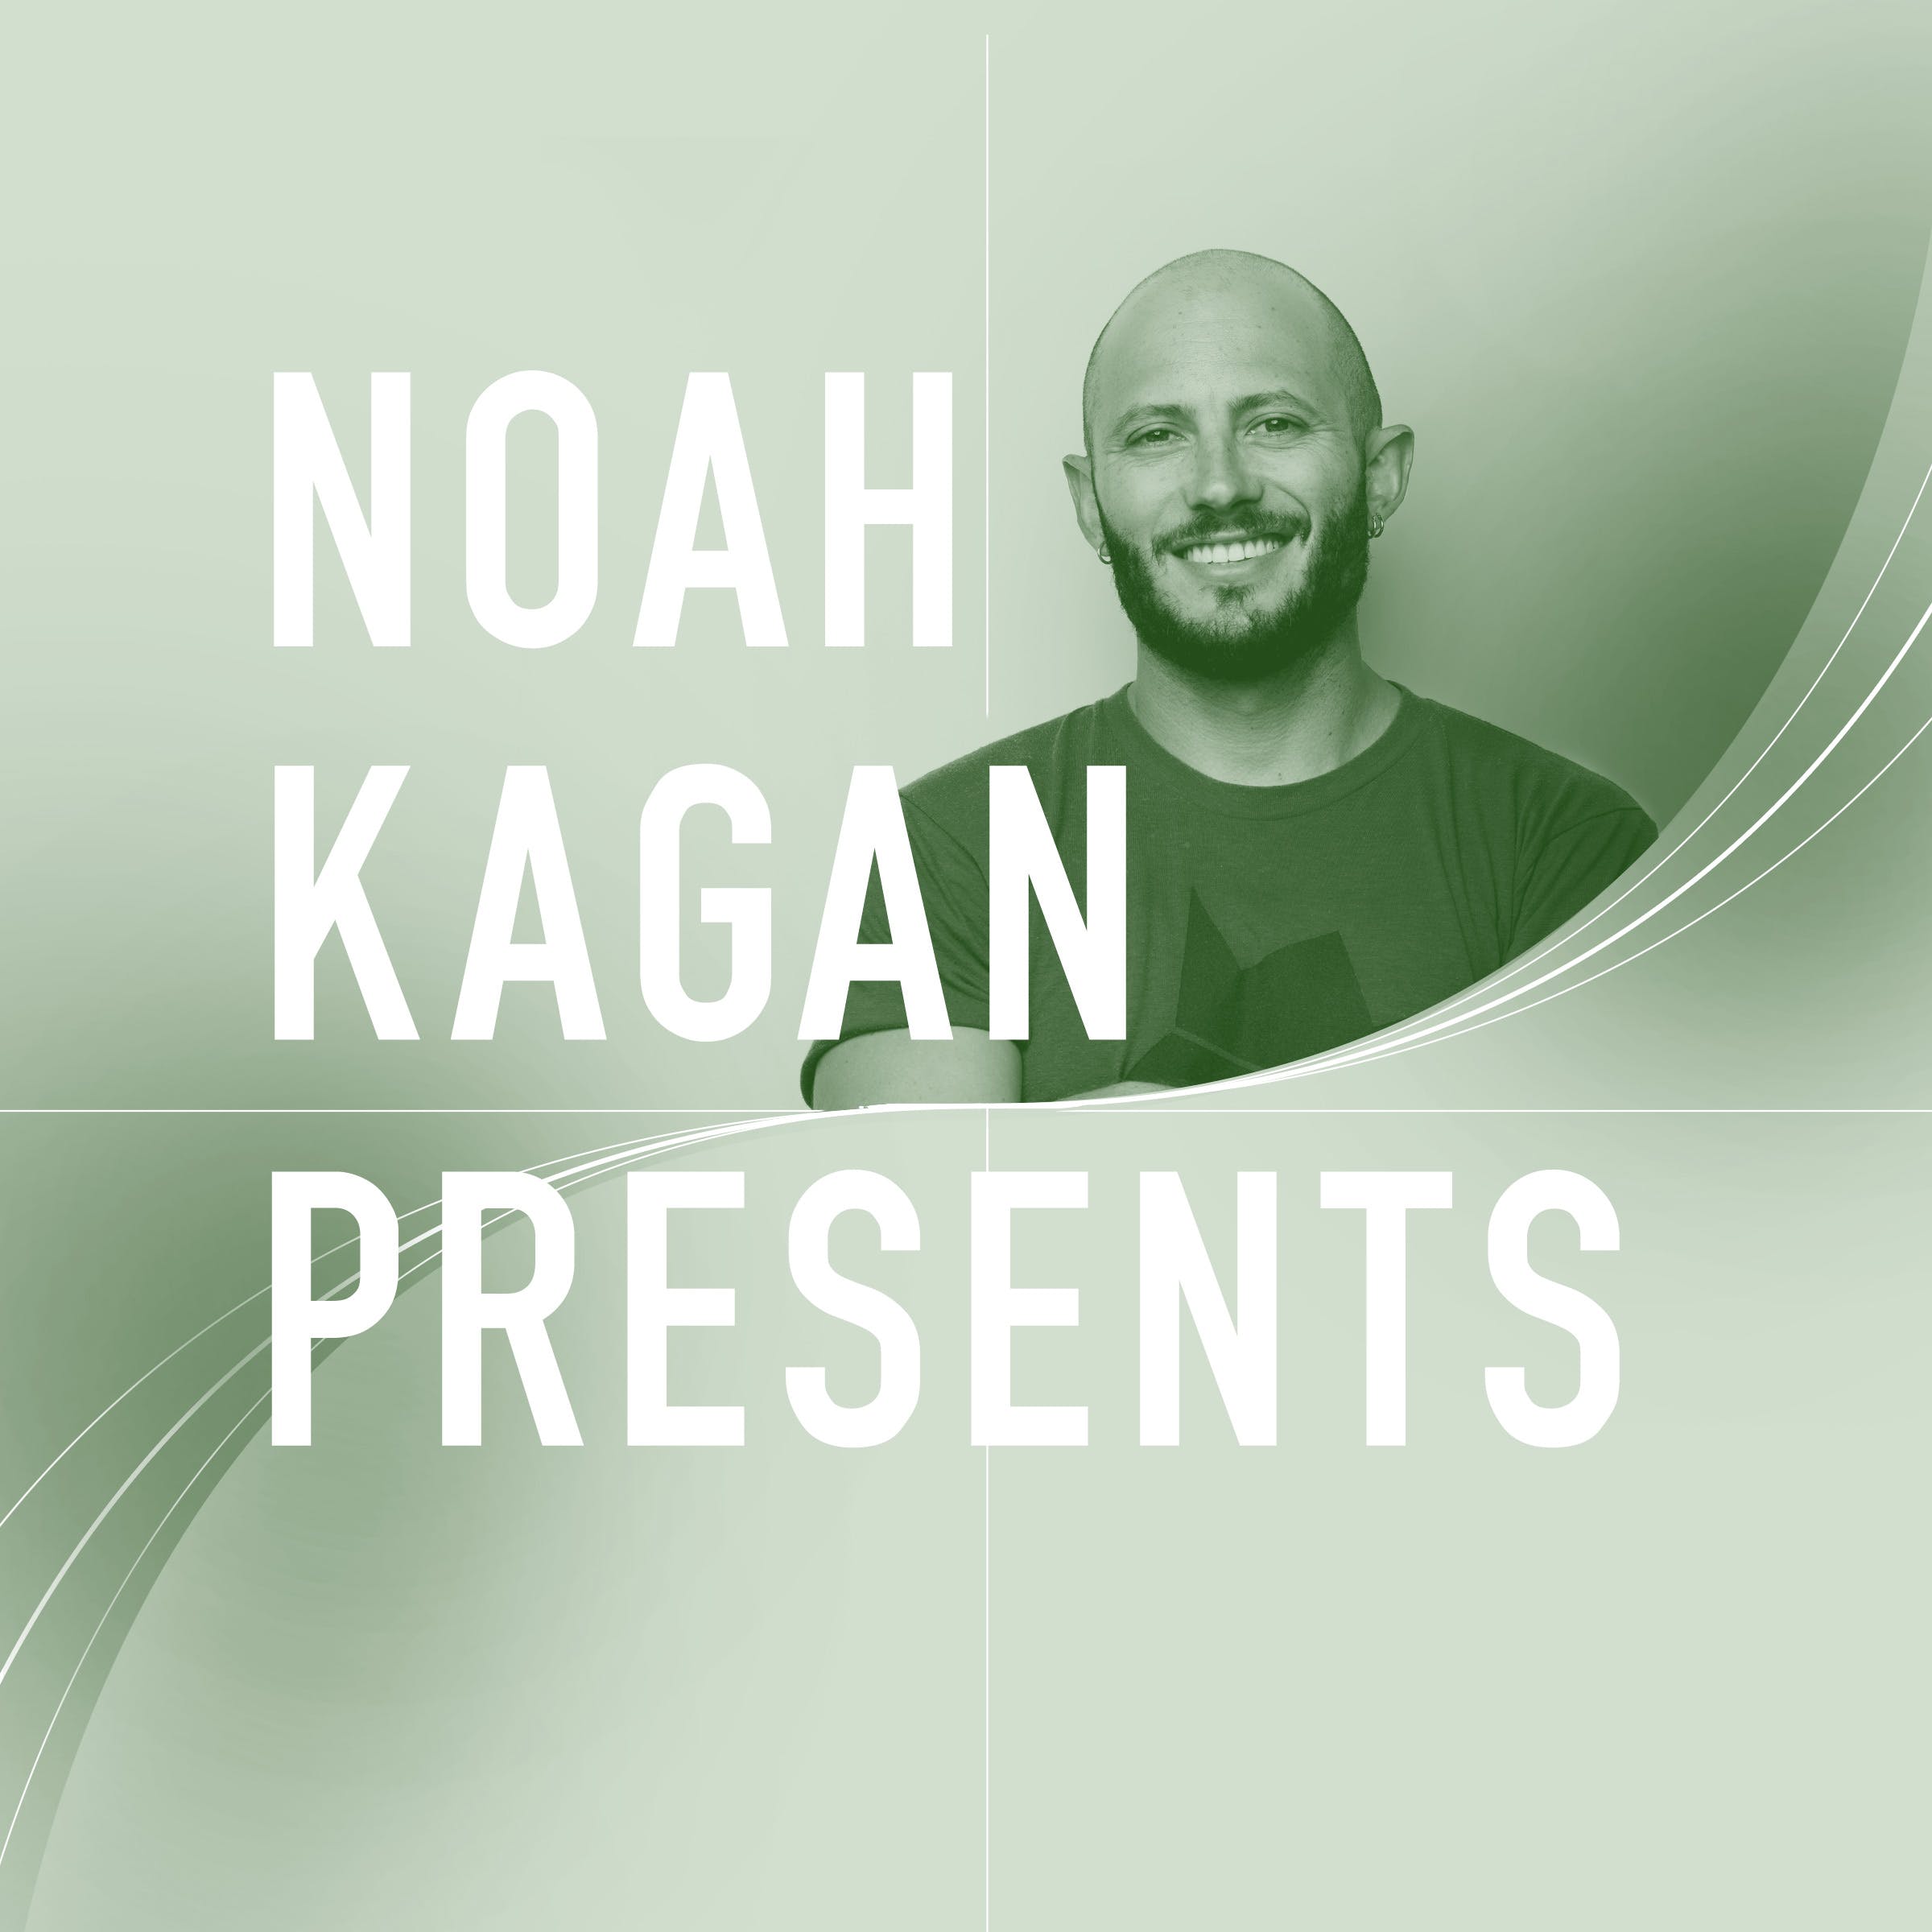 Noah Kagan Presents – David Kadavy media 1